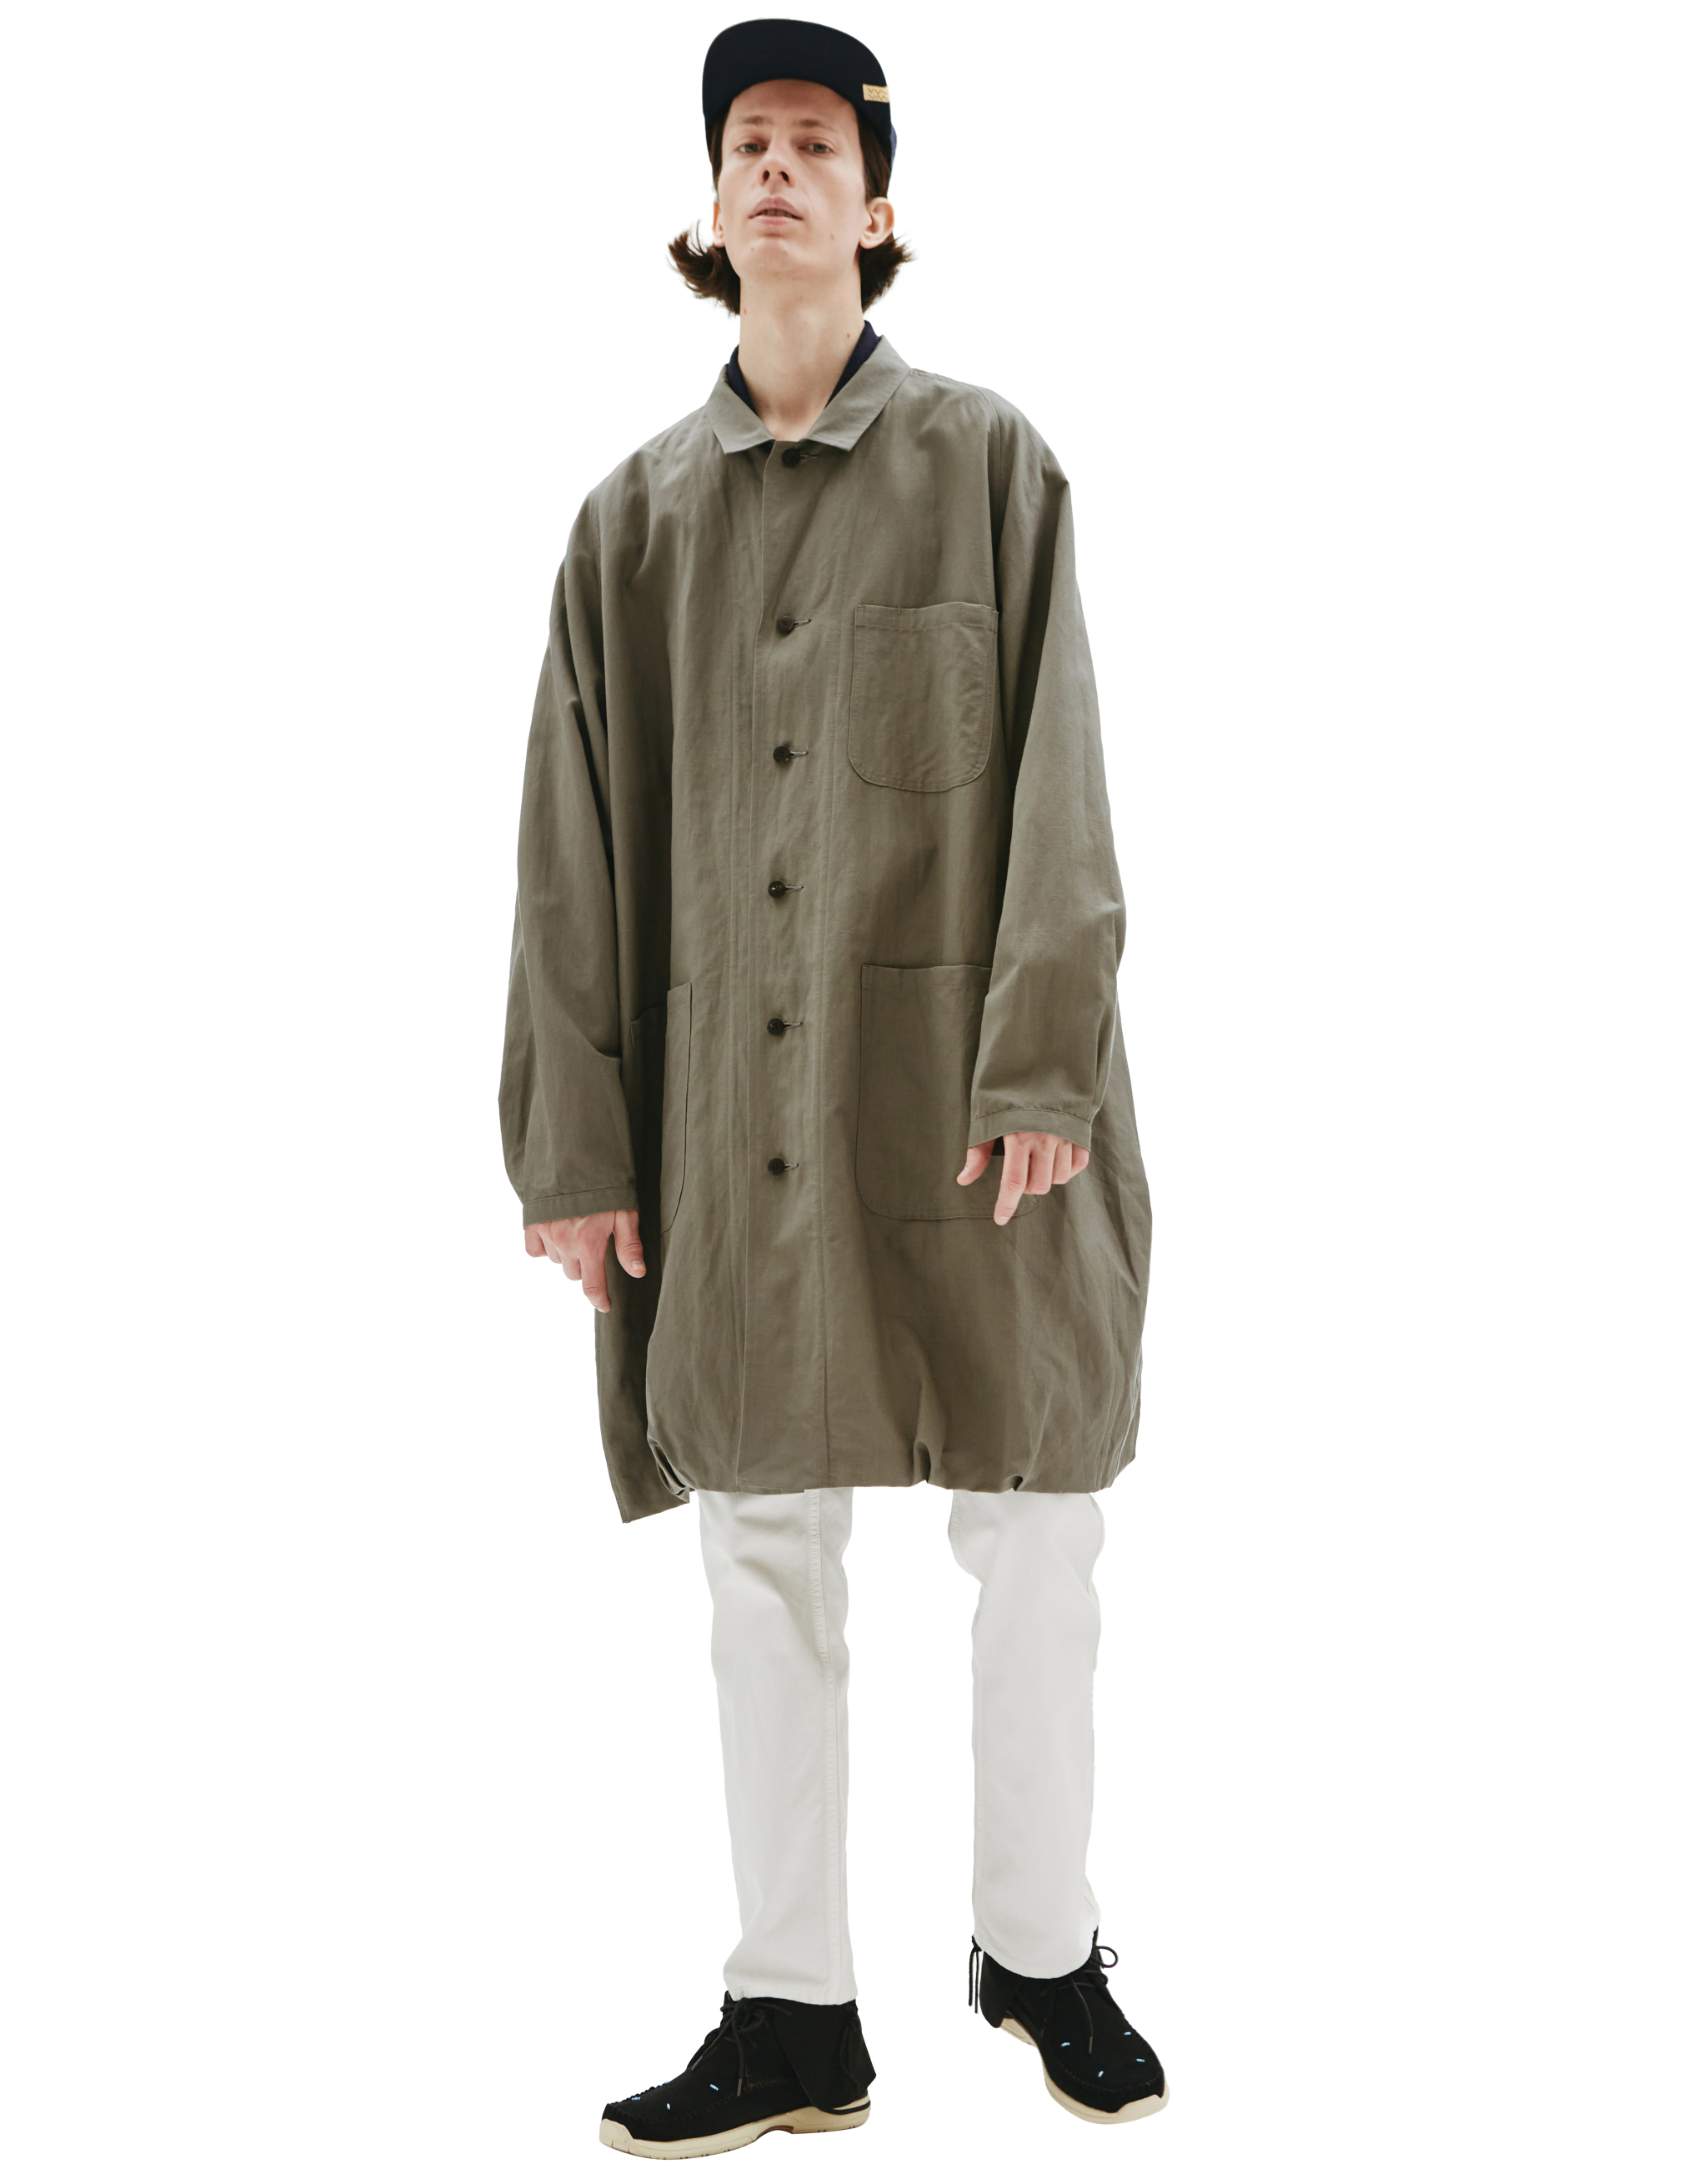 Пальто Laboratory с накладными карманами visvim 0122105013010/olv, размер 5